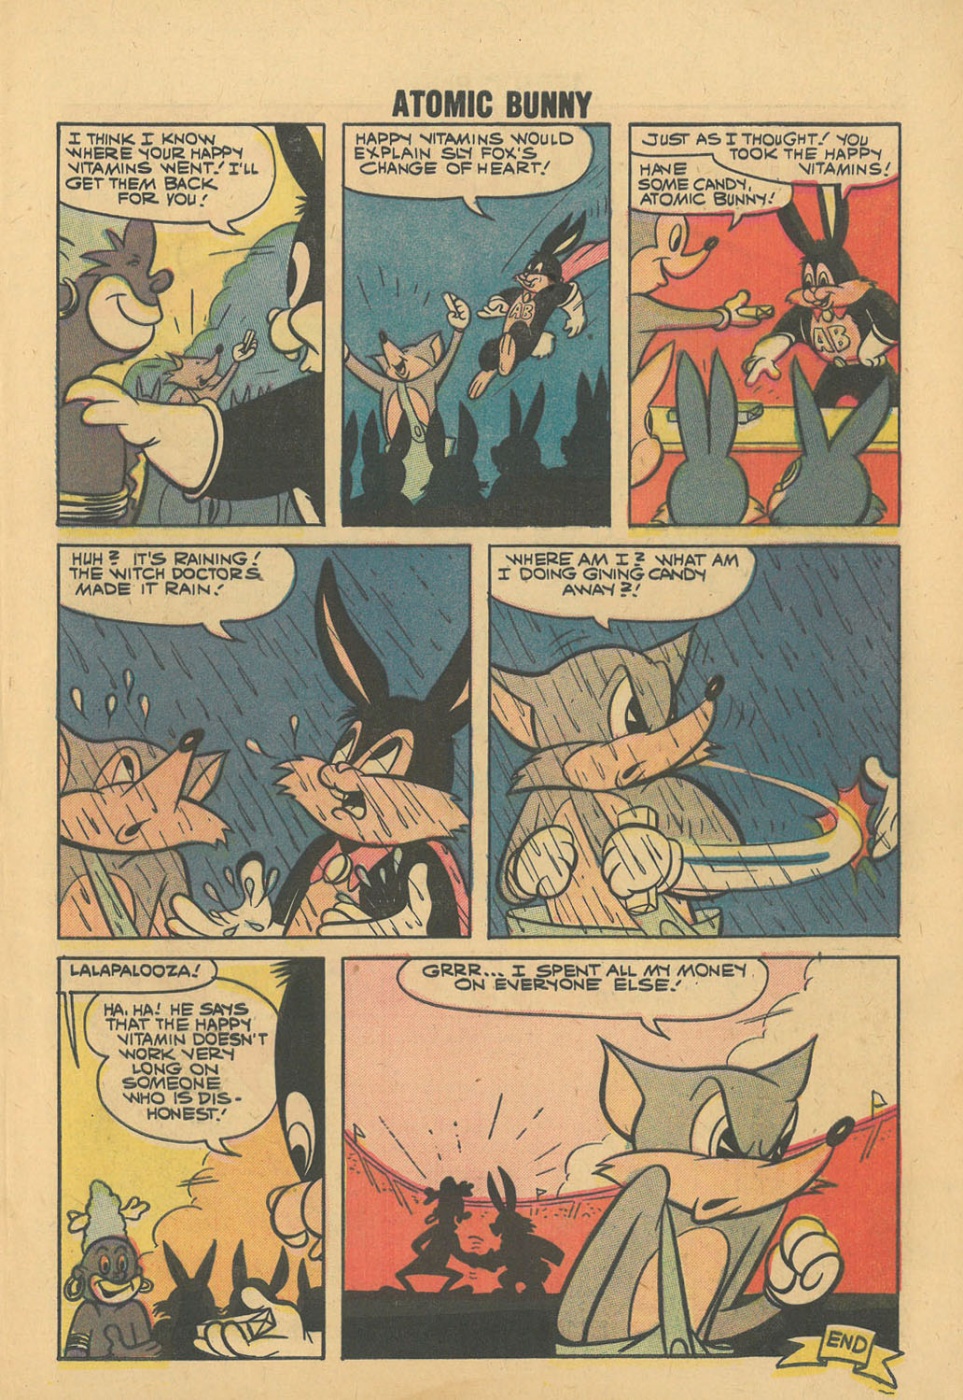 Atomic-Bunny-Comic-Strips (c) (9)